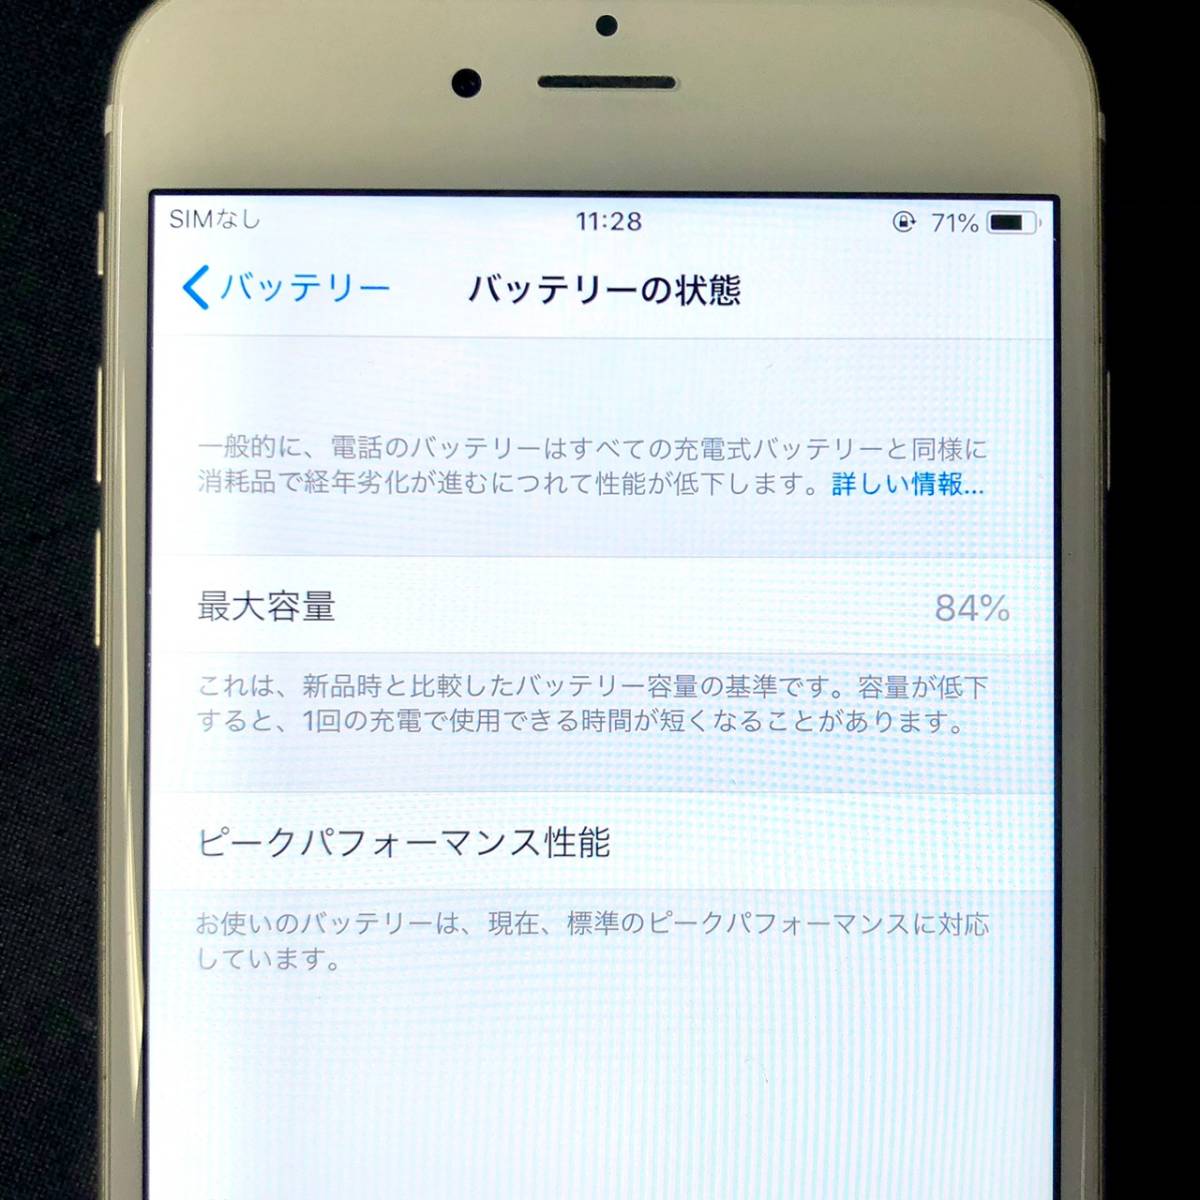 BJm165R 60 Apple iPhone 6 Plus A1524 16GB 本体 ゴールド 判定○ スマートフォン Softbank 初期化済み_画像4